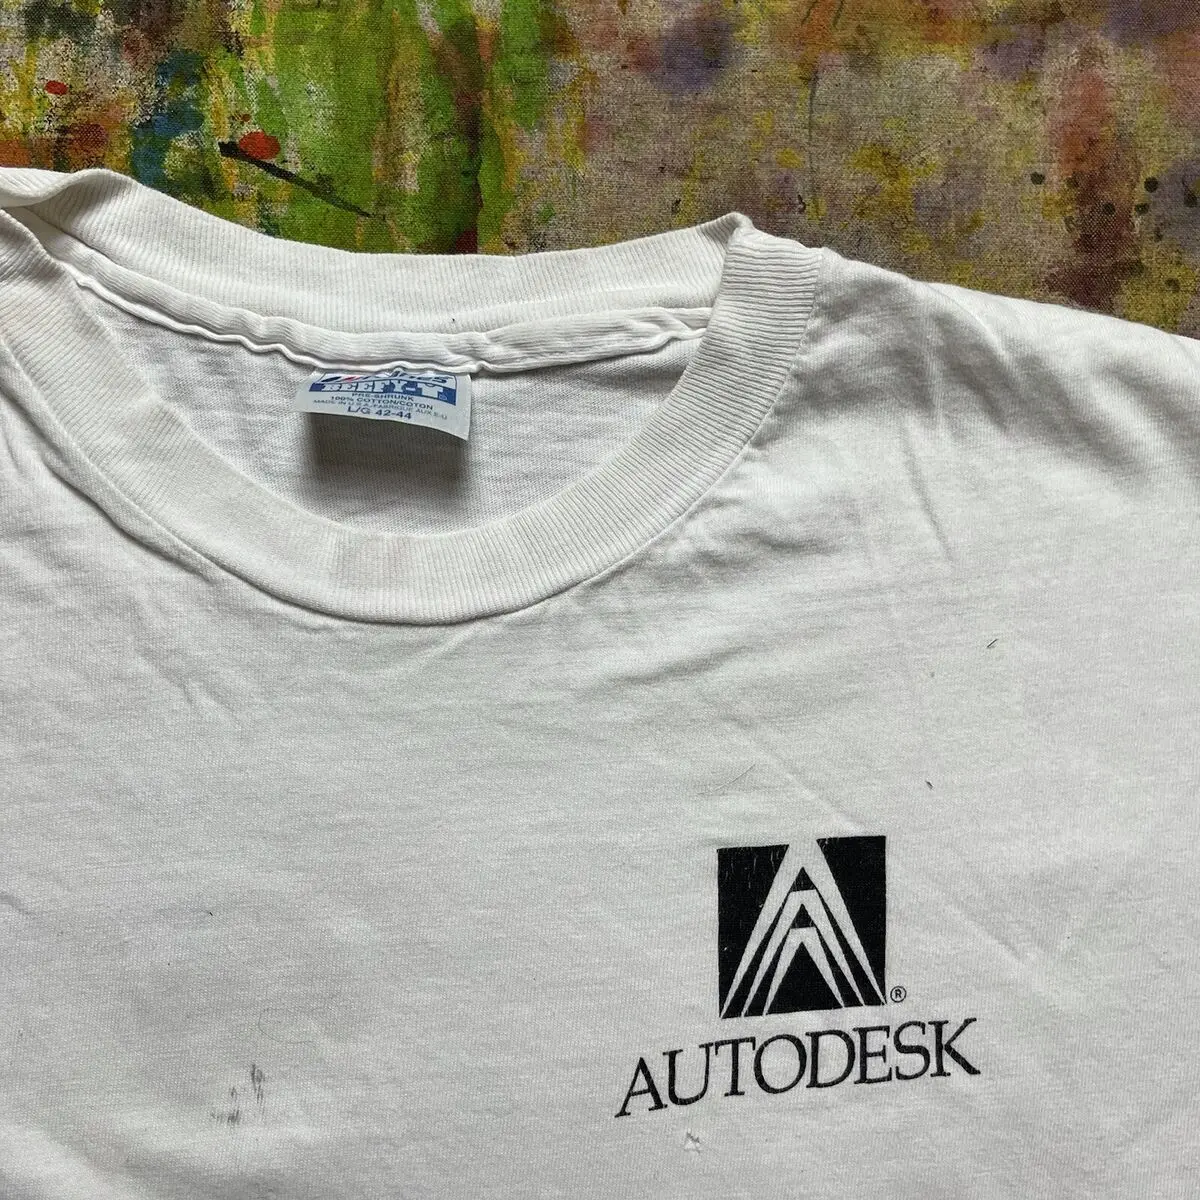 autodesk hewlett packard - What is Autodesk do